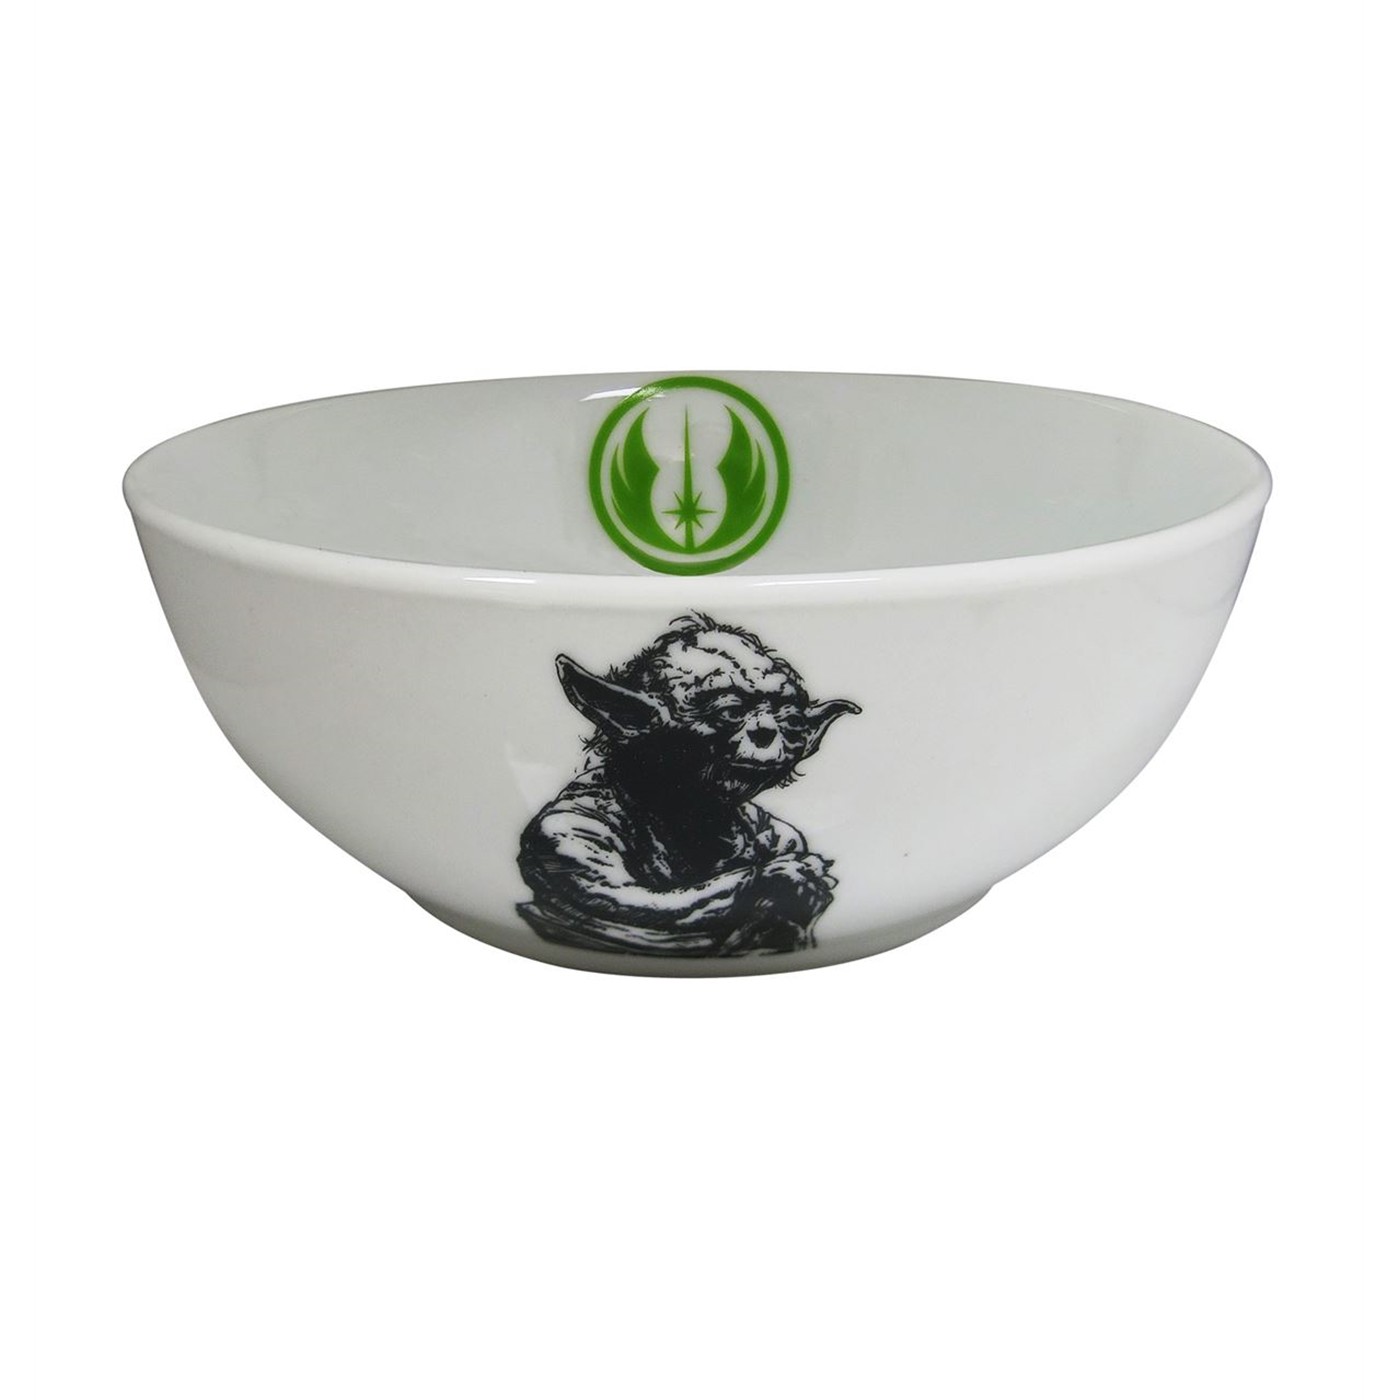 Star Wars Symbols Ceramic Bowl 4-Pack